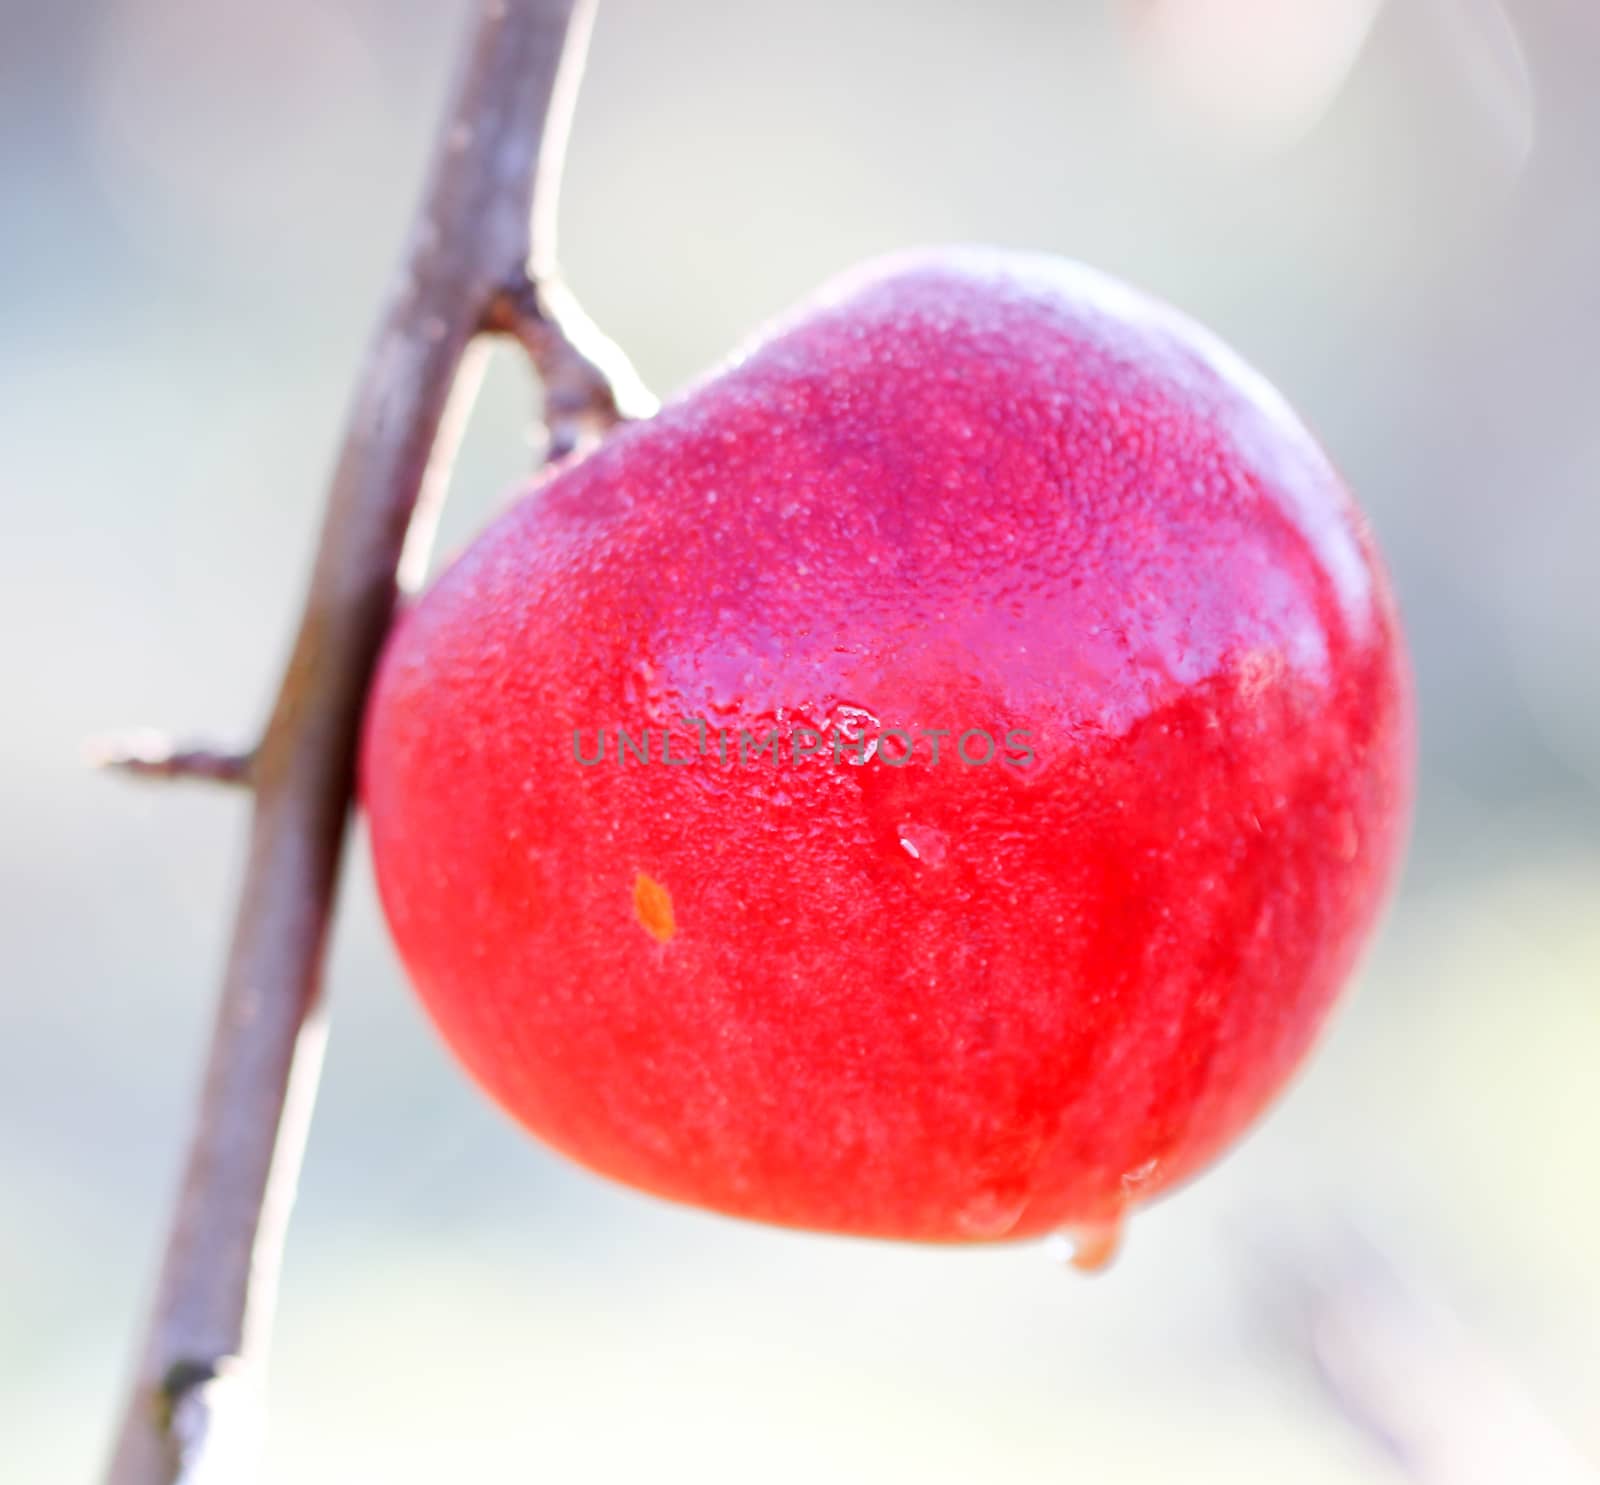 Apples on tree on november morning by nehru